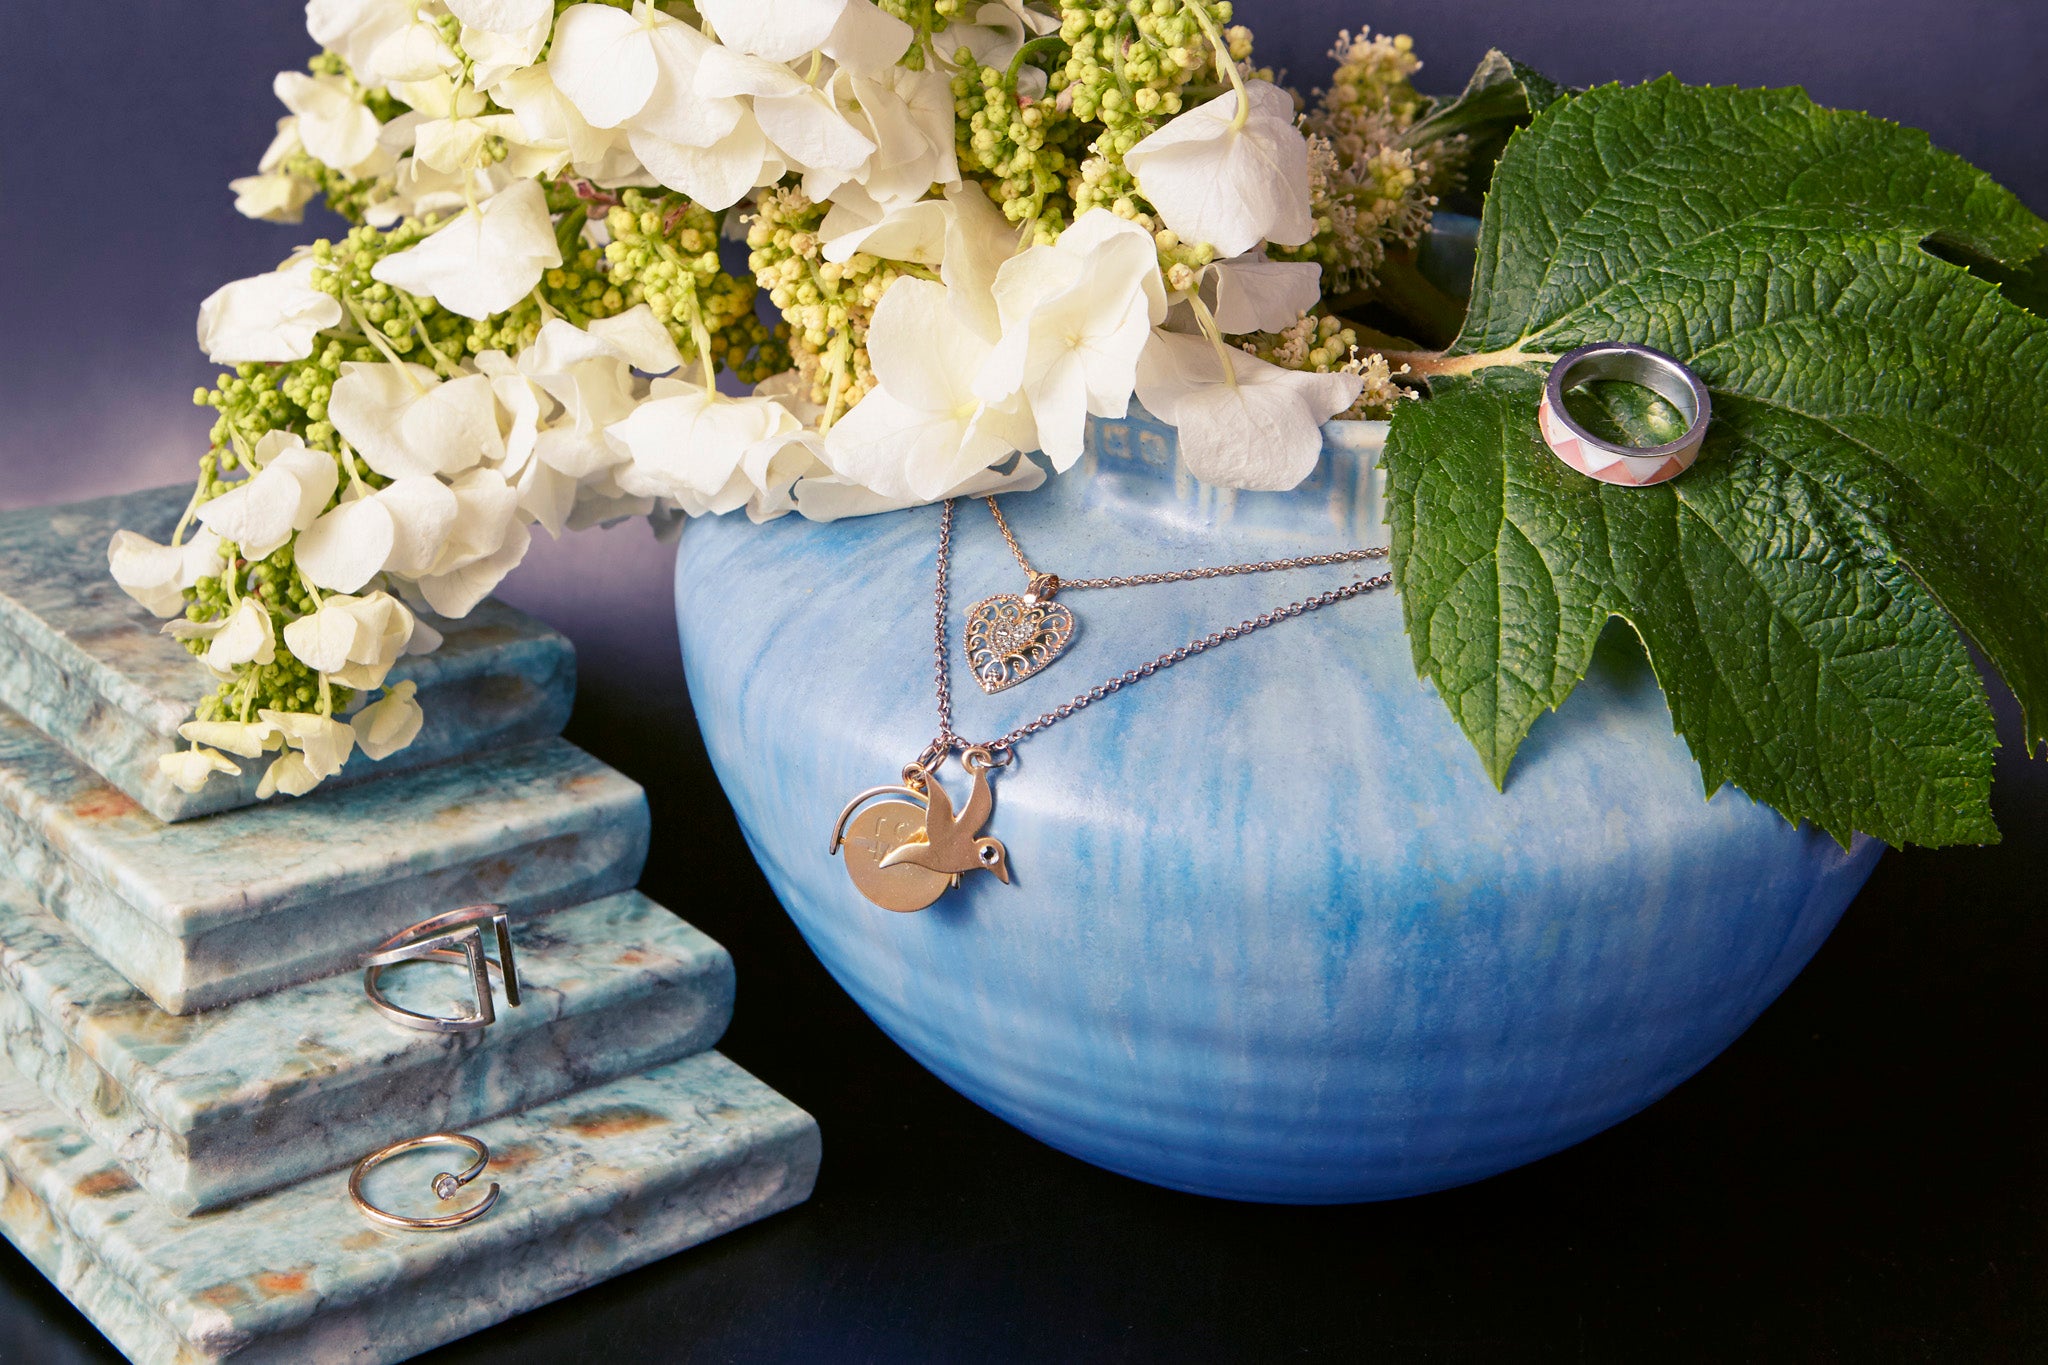 julia landauer's meaningful jewelry heart shaped necklace blue pot with flowers